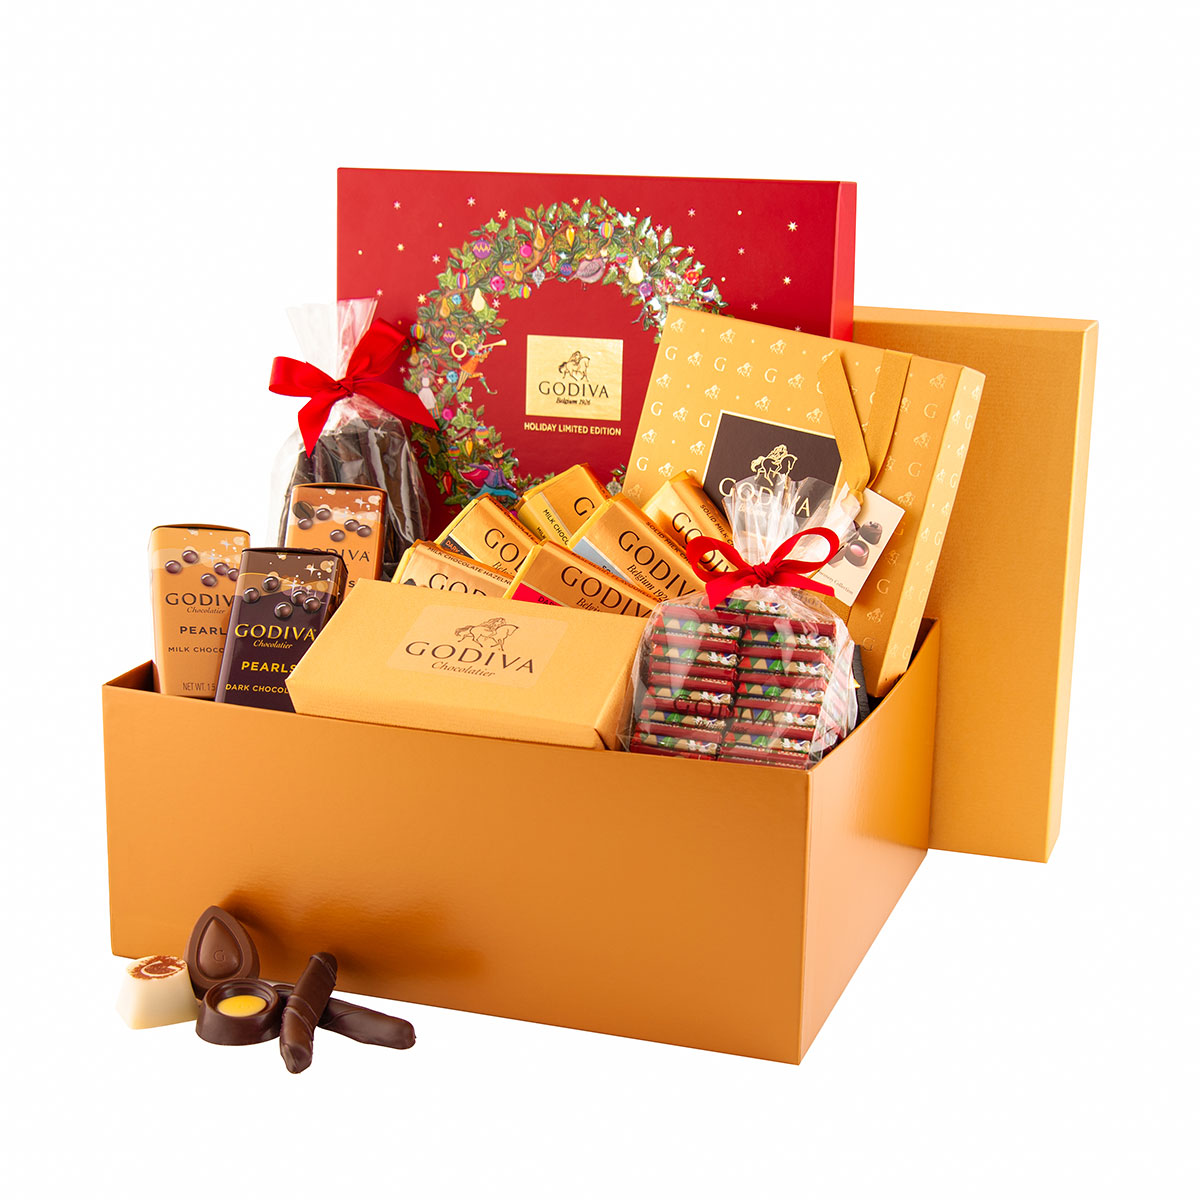 Godiva Christmas Gold Gift Box Chocolates at the Office